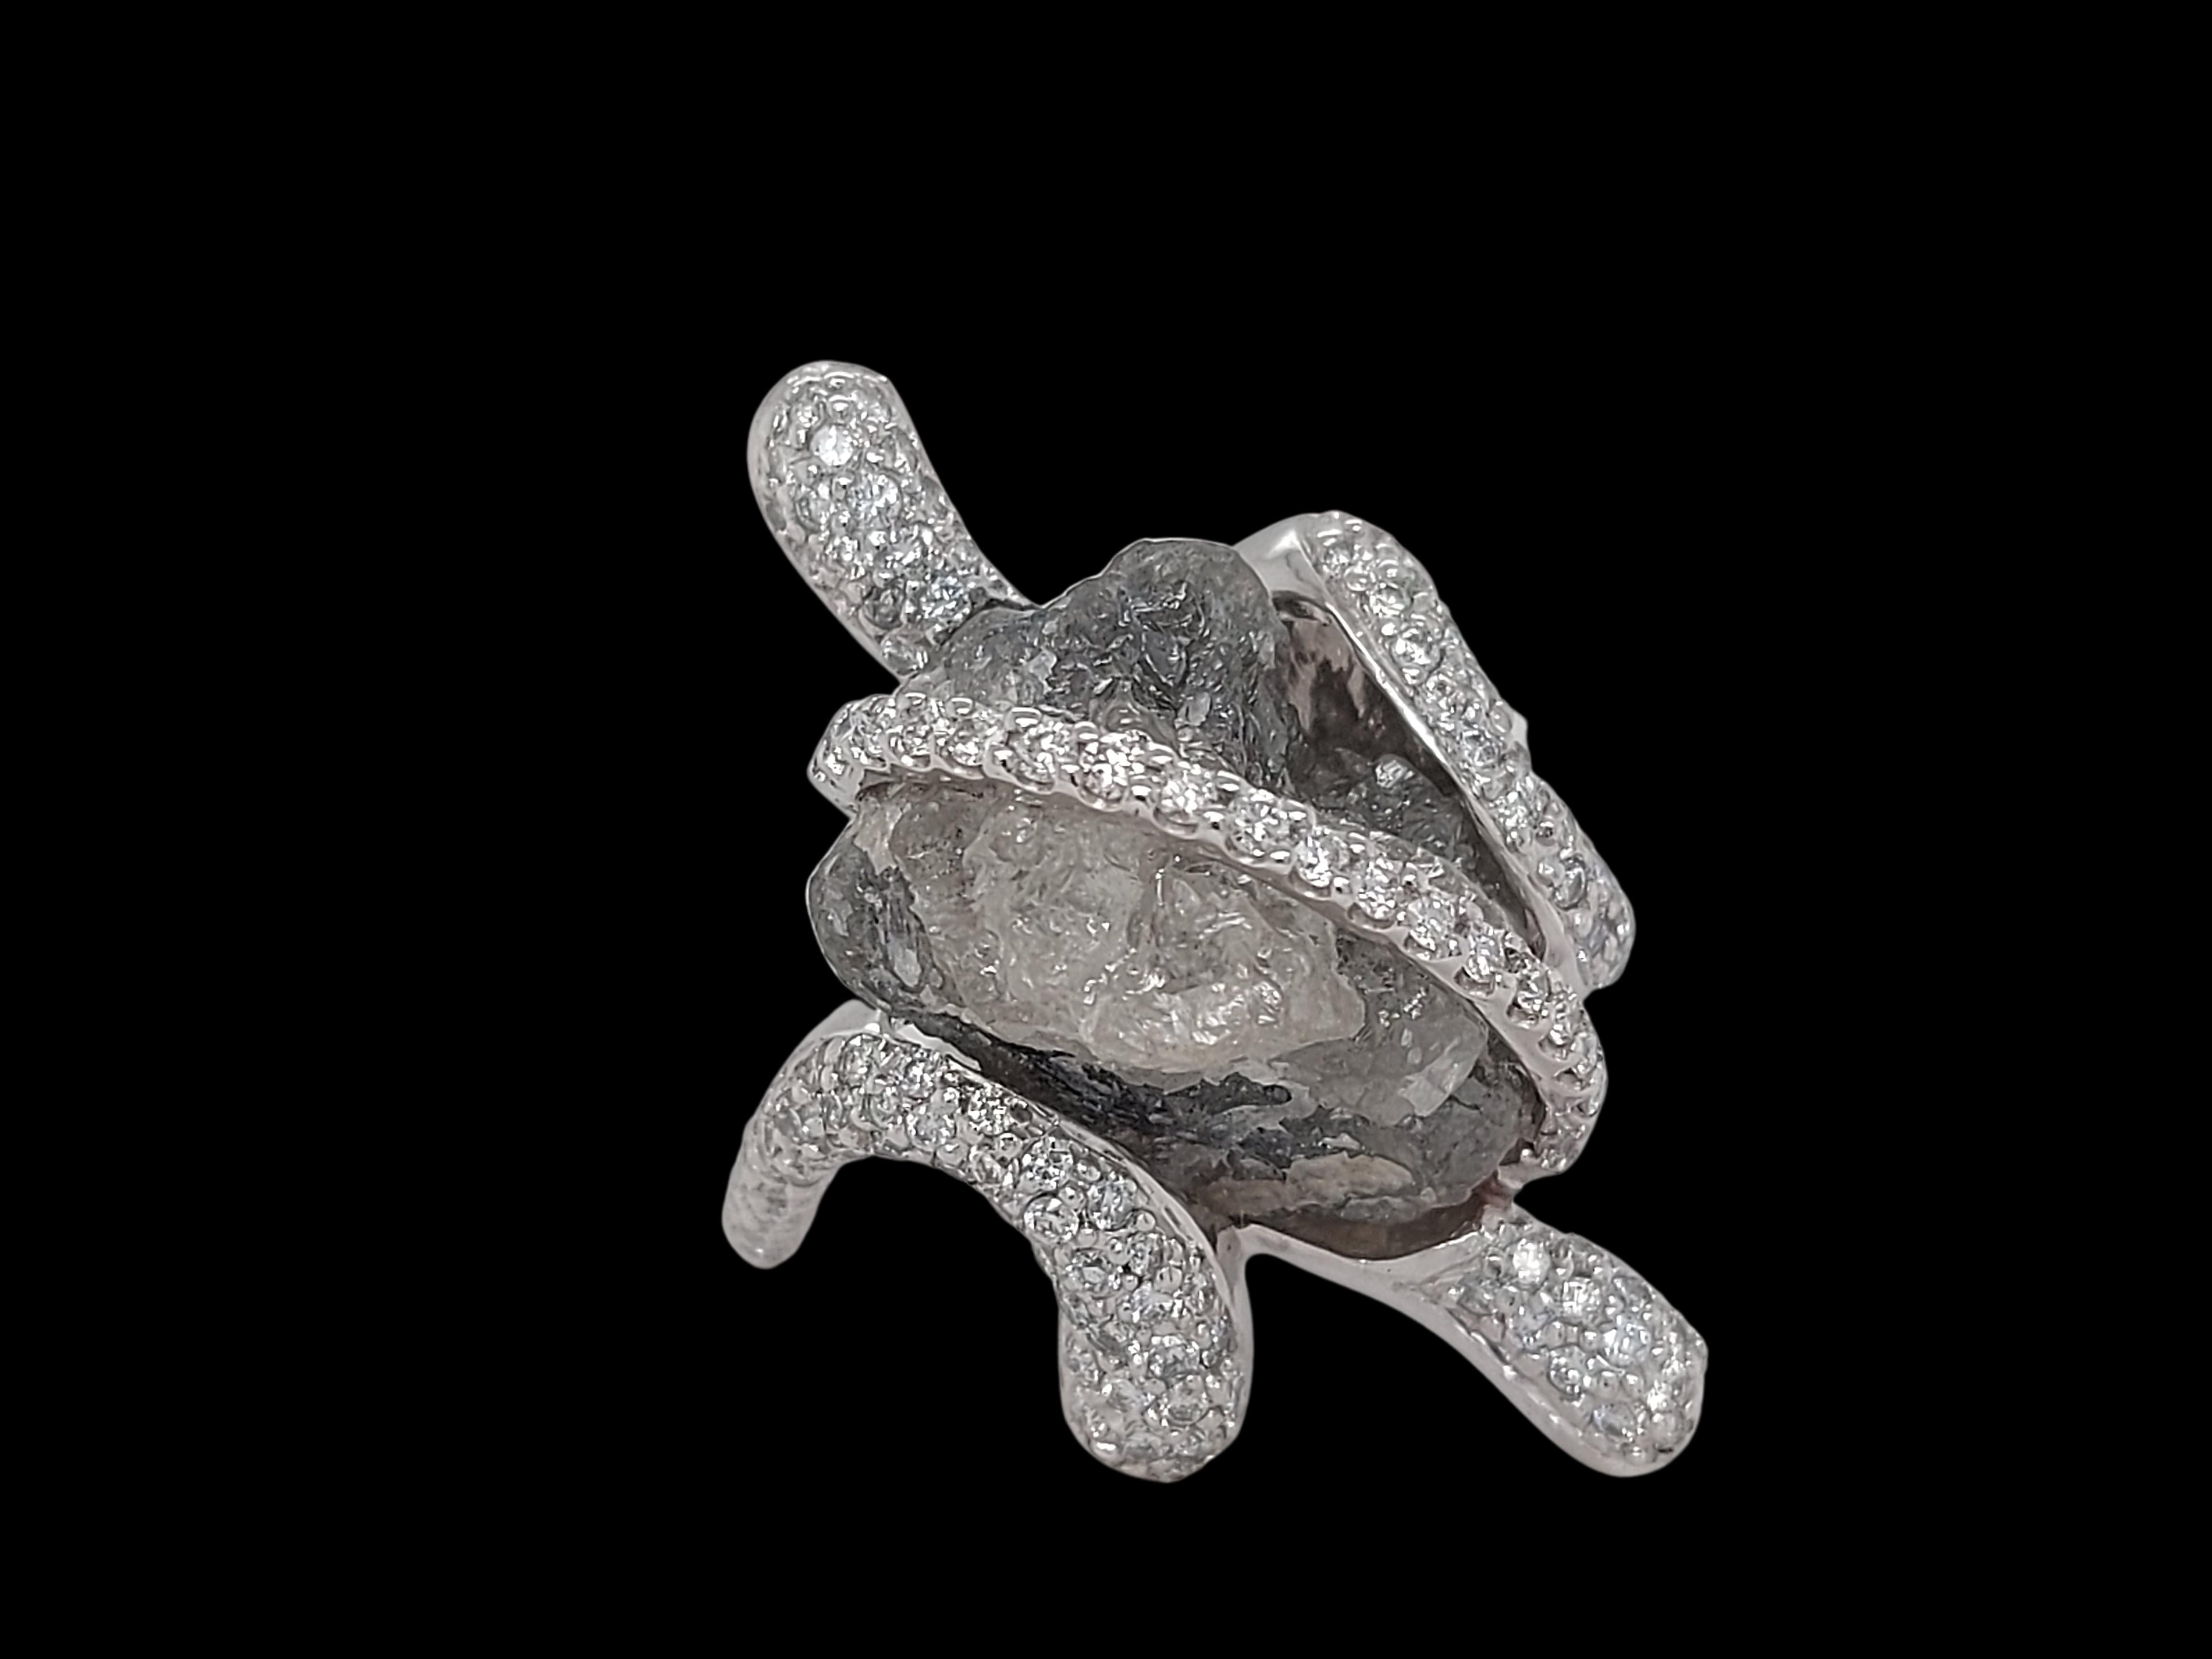 Rough 14 Carat Center and Brilliant Cut Diamond Unique Handmade White Gold Ring For Sale 9